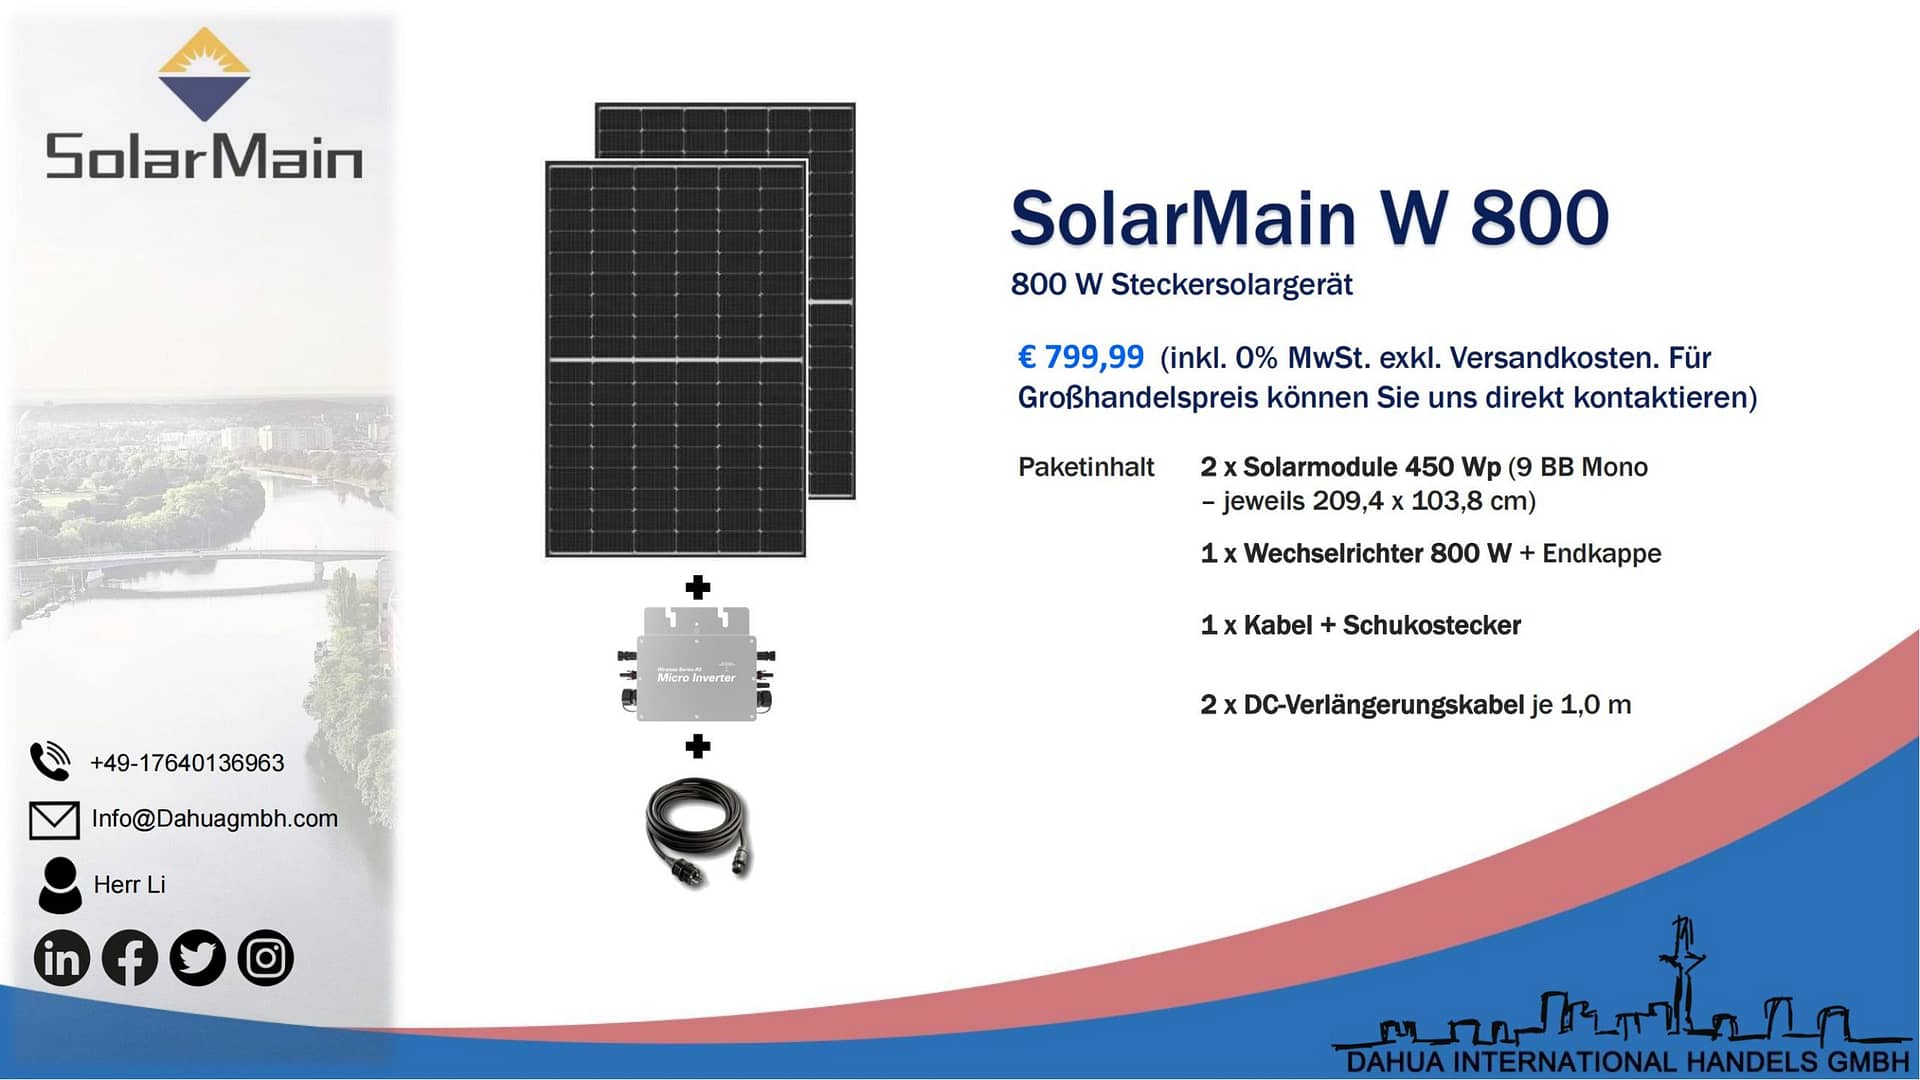 SolarMain W 800 Flyer_20230330171332_00